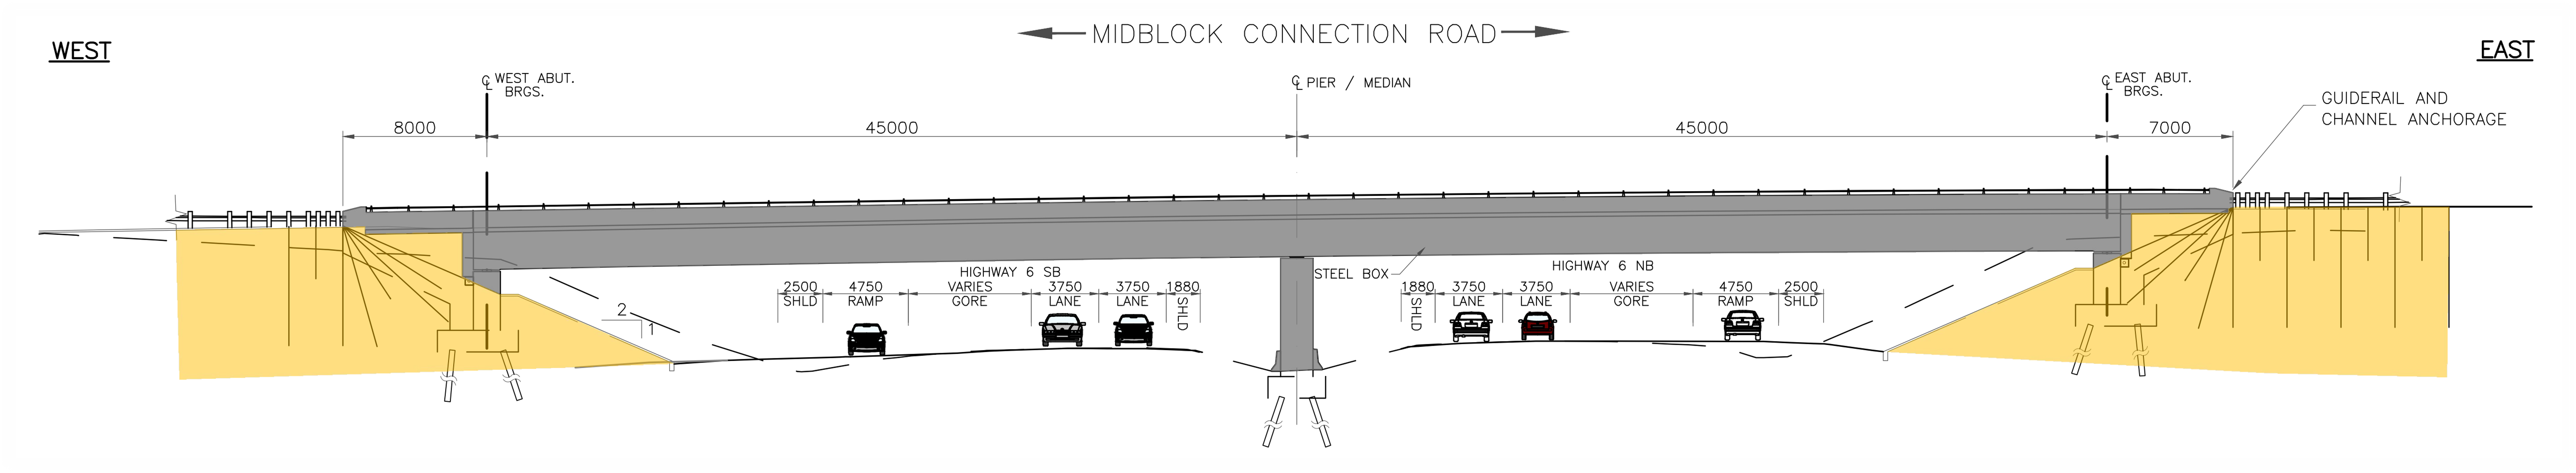 General arrangement engineering design drawing of the Midblock Connection Road Underpass